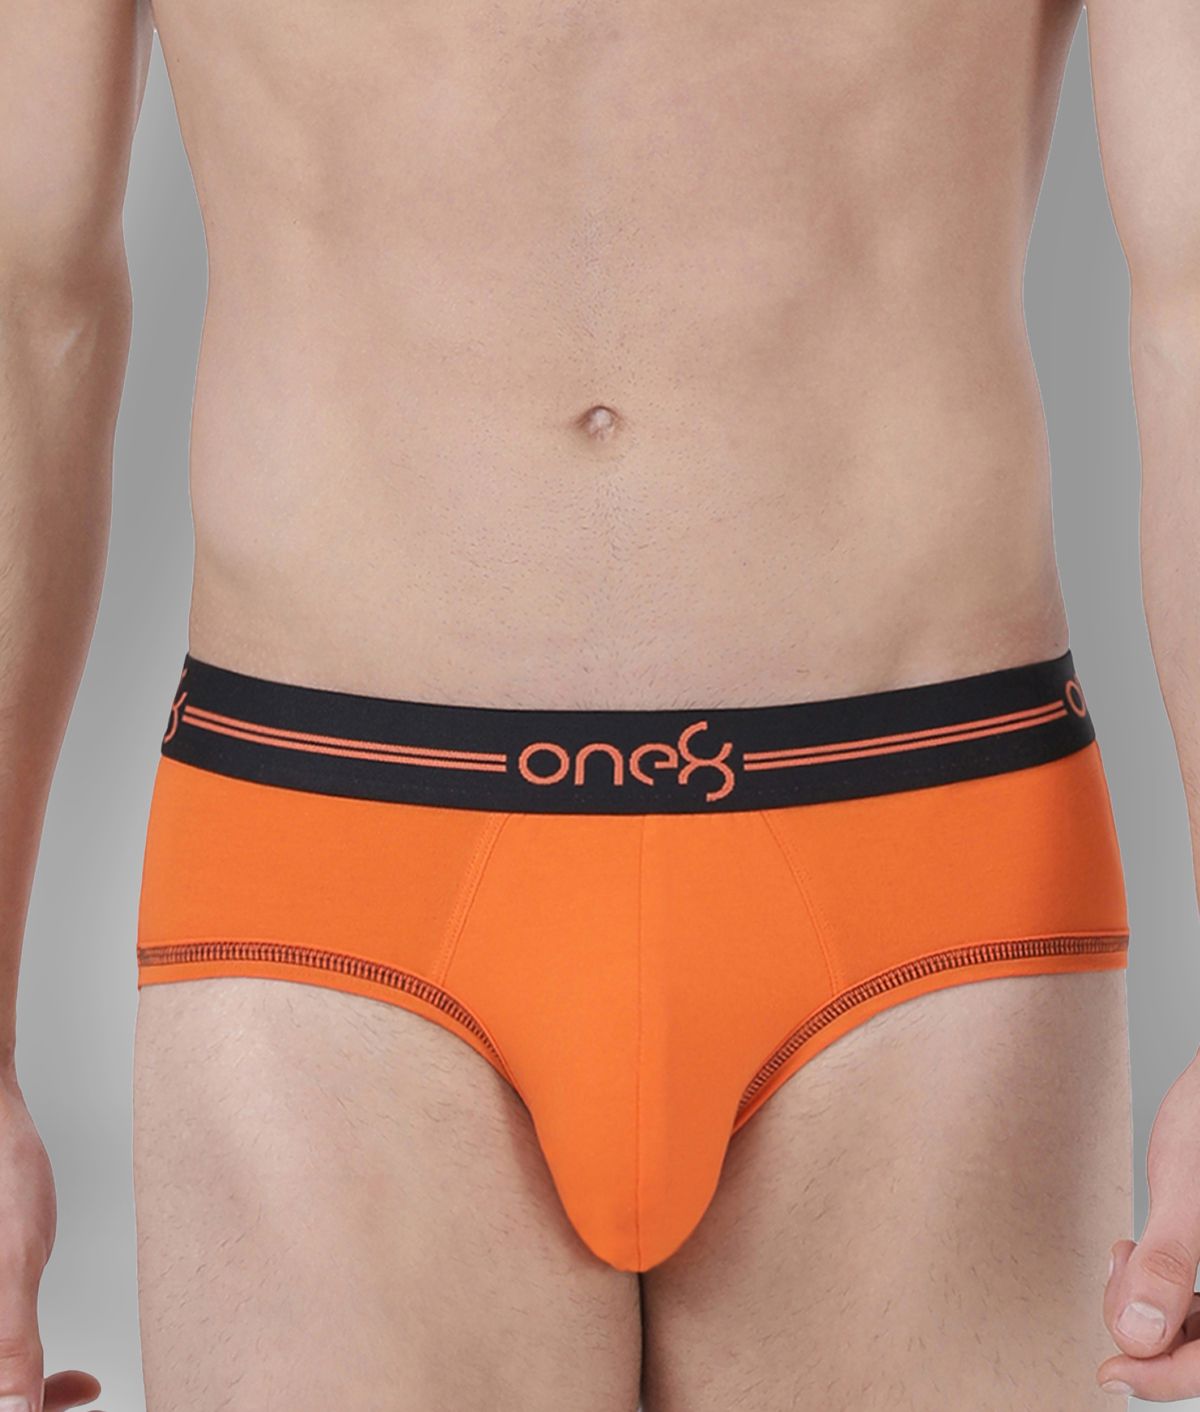     			One8 by Virat Kohli - Orange Cotton Men's Briefs ( Pack of 1 )